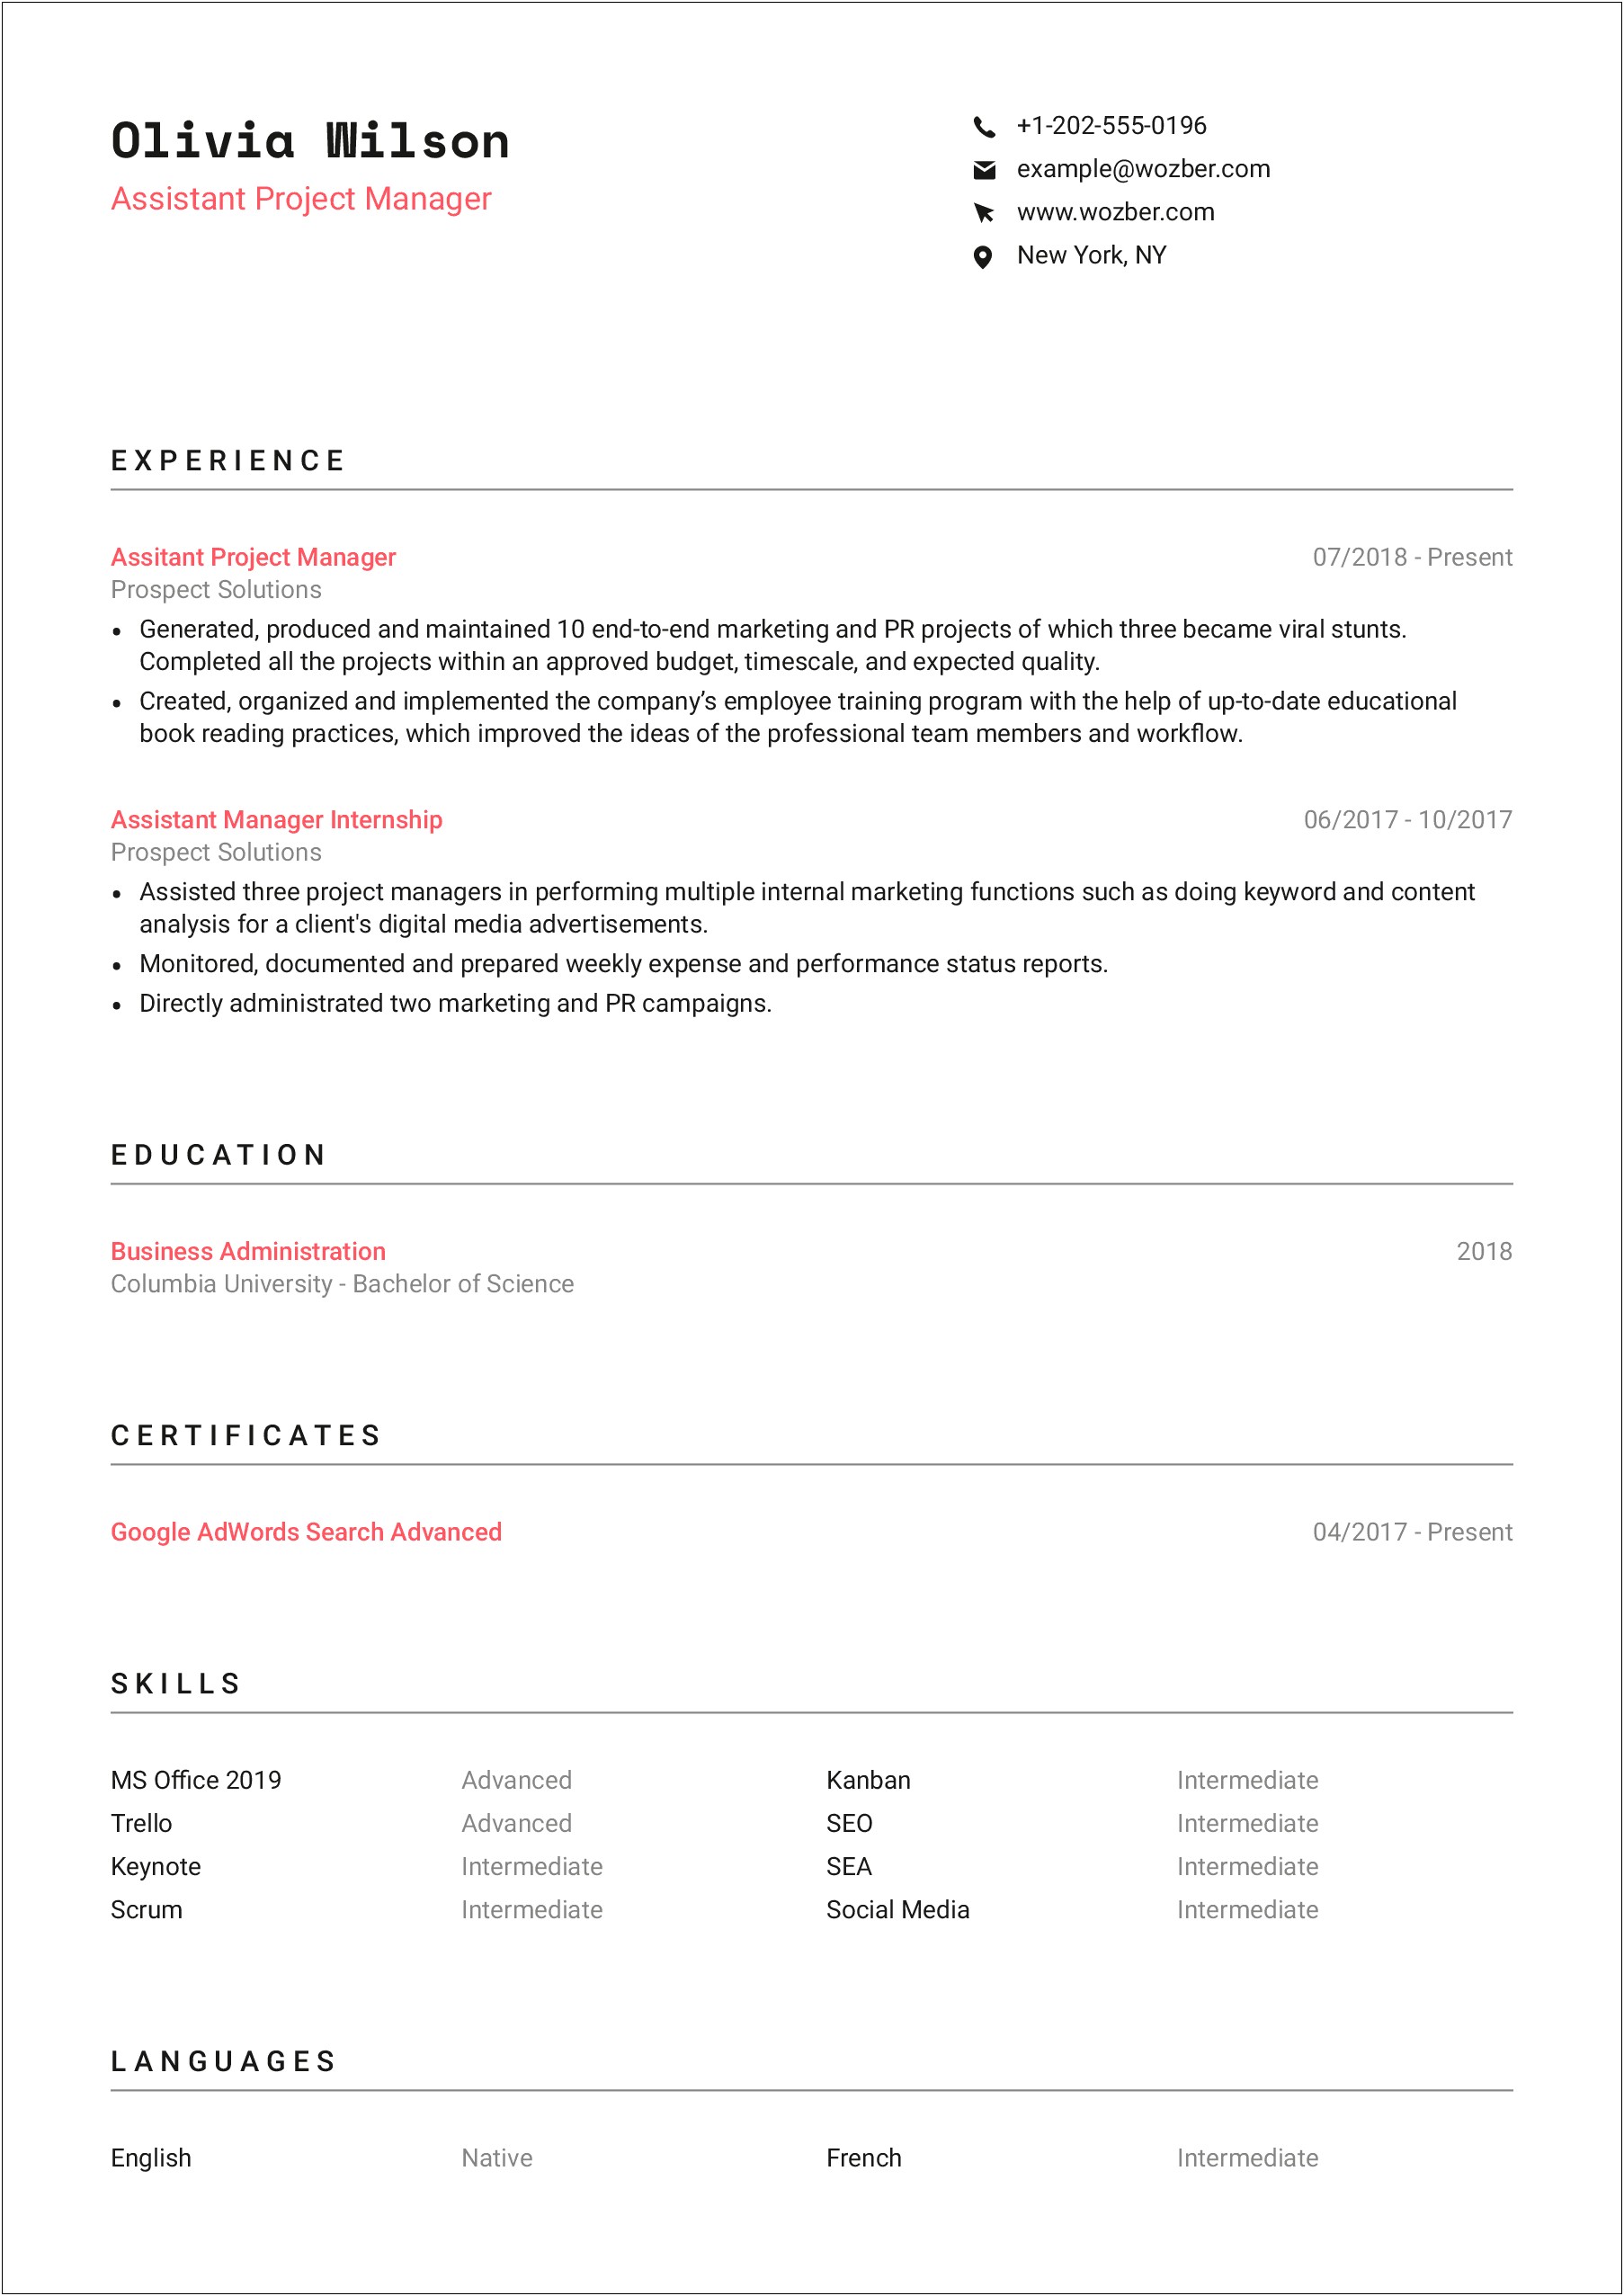 Digital Marketing Assistant Job Description For Resume